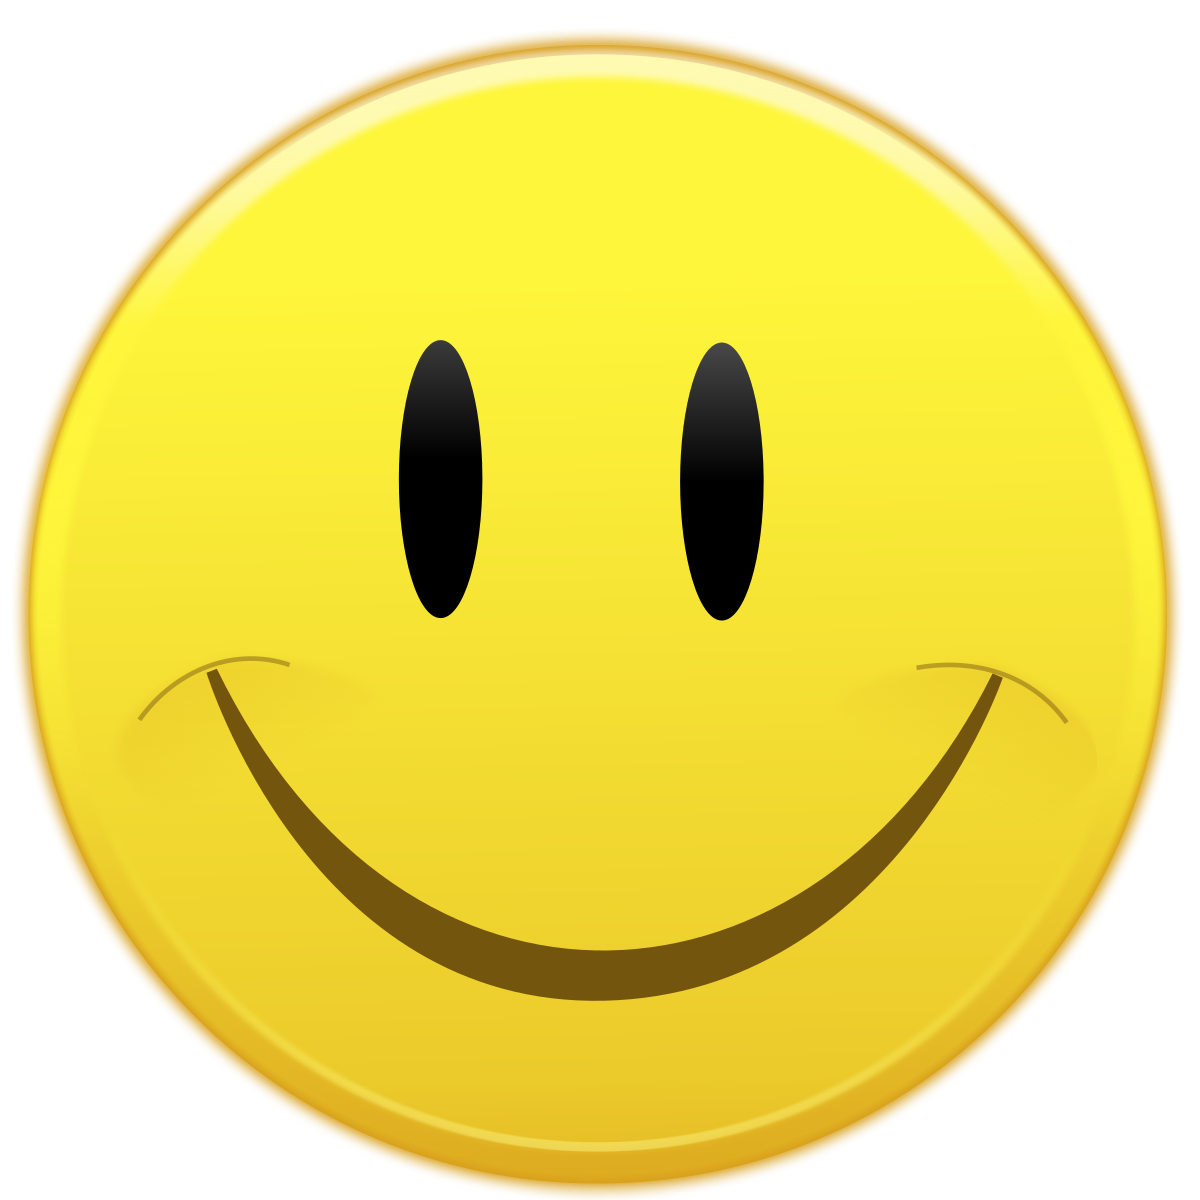 A smiling emoji